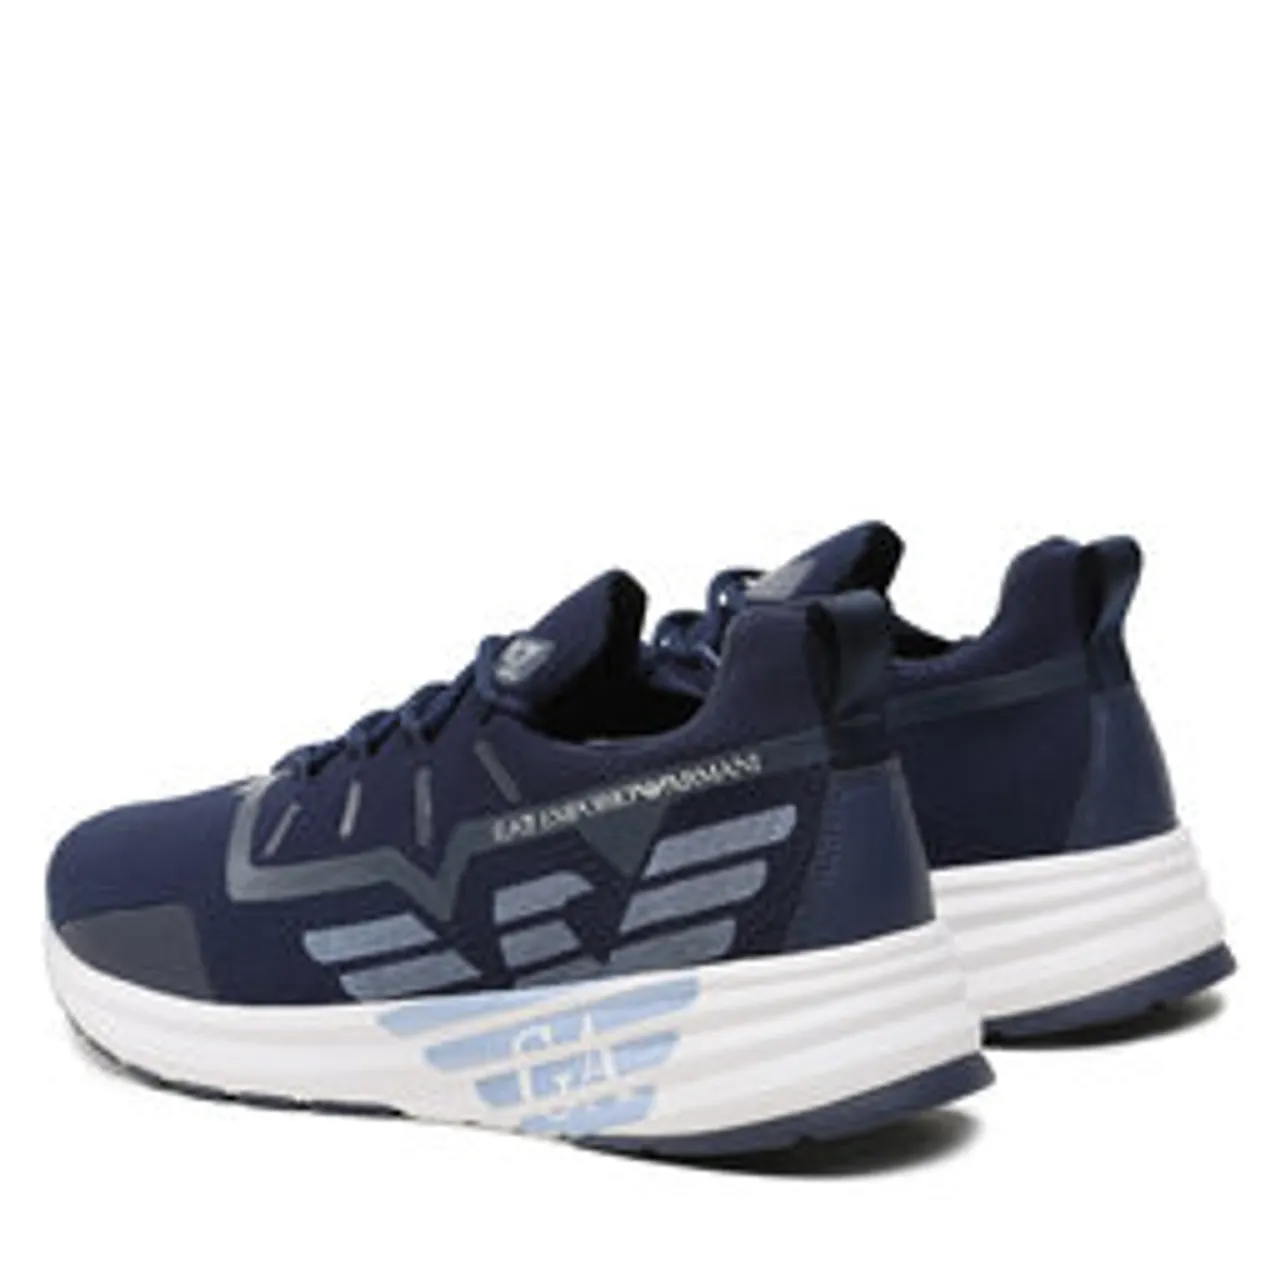 Sneakers EA7 Emporio Armani X8X130 XK309 S339 Blk Iris/Ash Blu/Wht